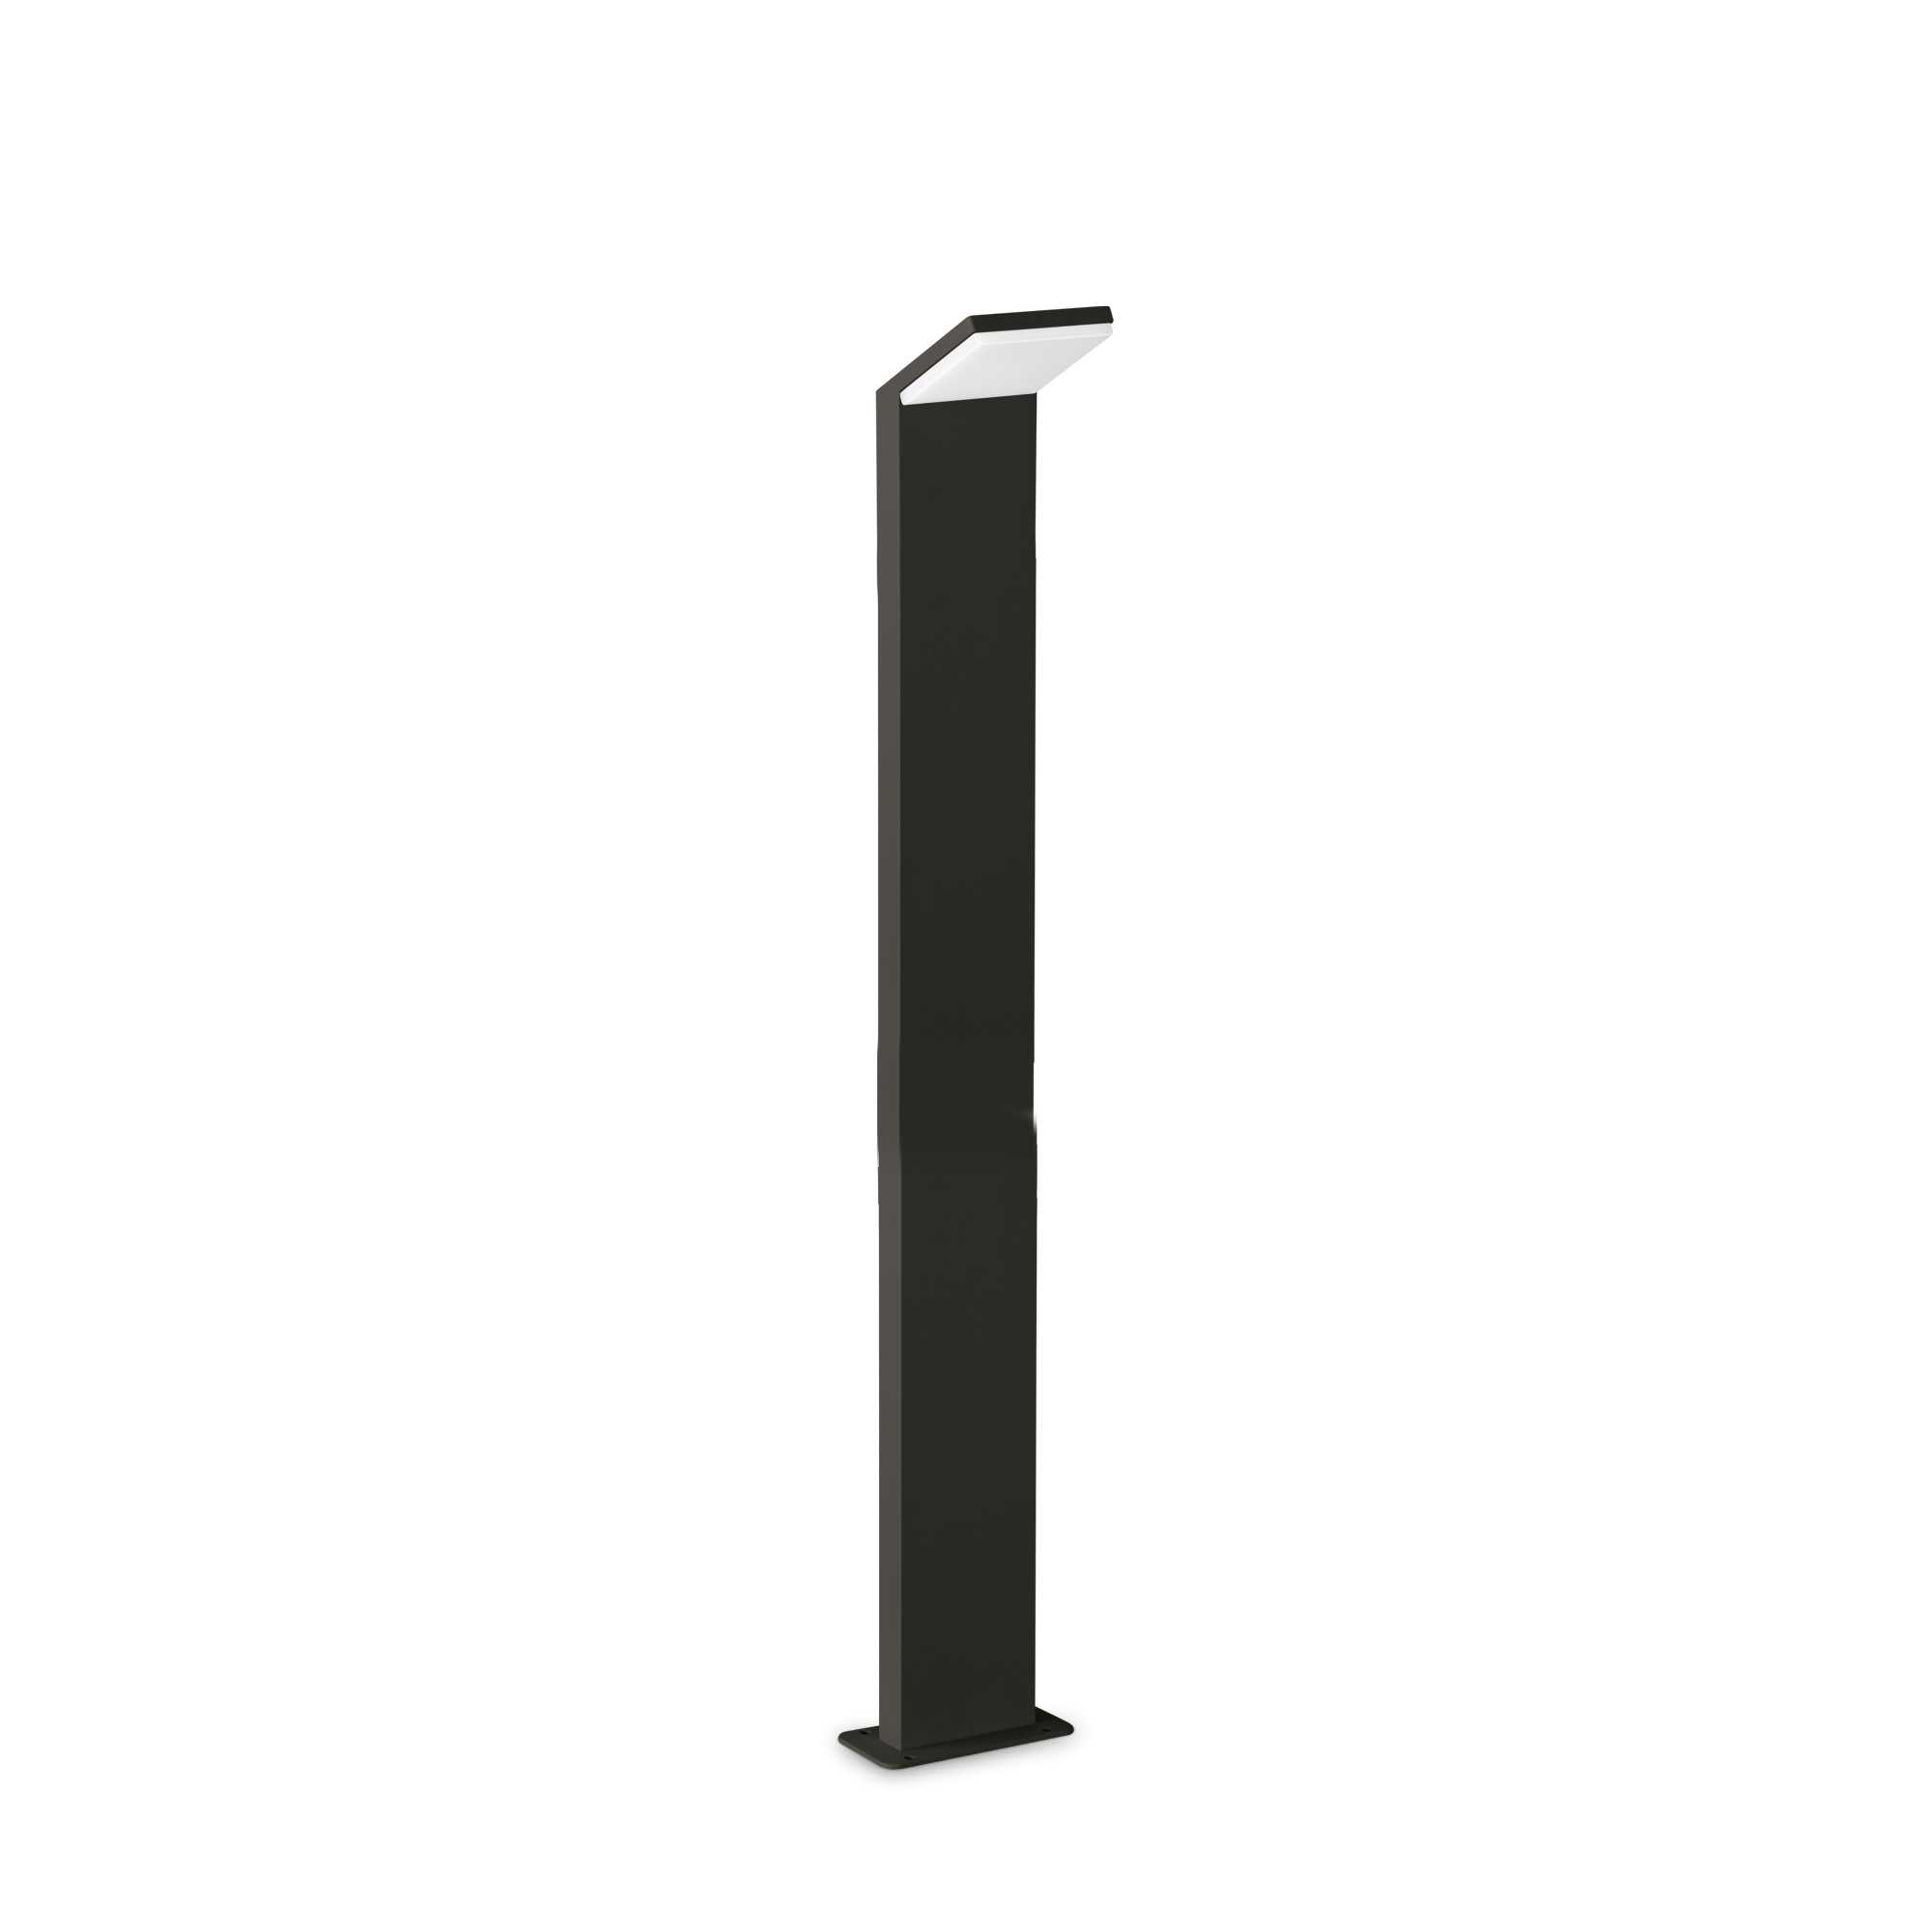 AD hotelska oprema Vanjska podna lampa Style pt h100 (4000k)- Crne boje slika proizvoda